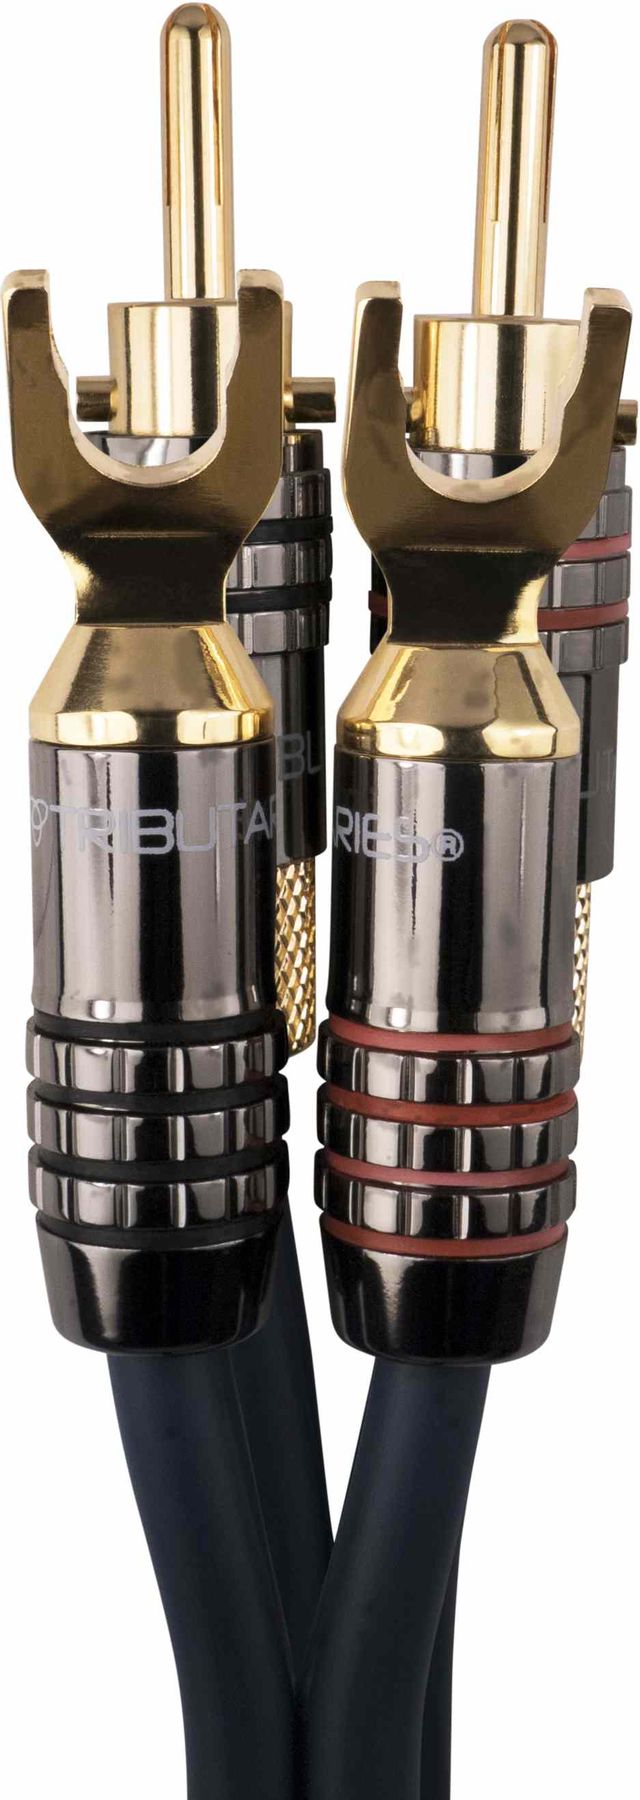 Tributaries® Serires 8 10 Ft. Banana Plugs/Spade Lugs Speaker Cable